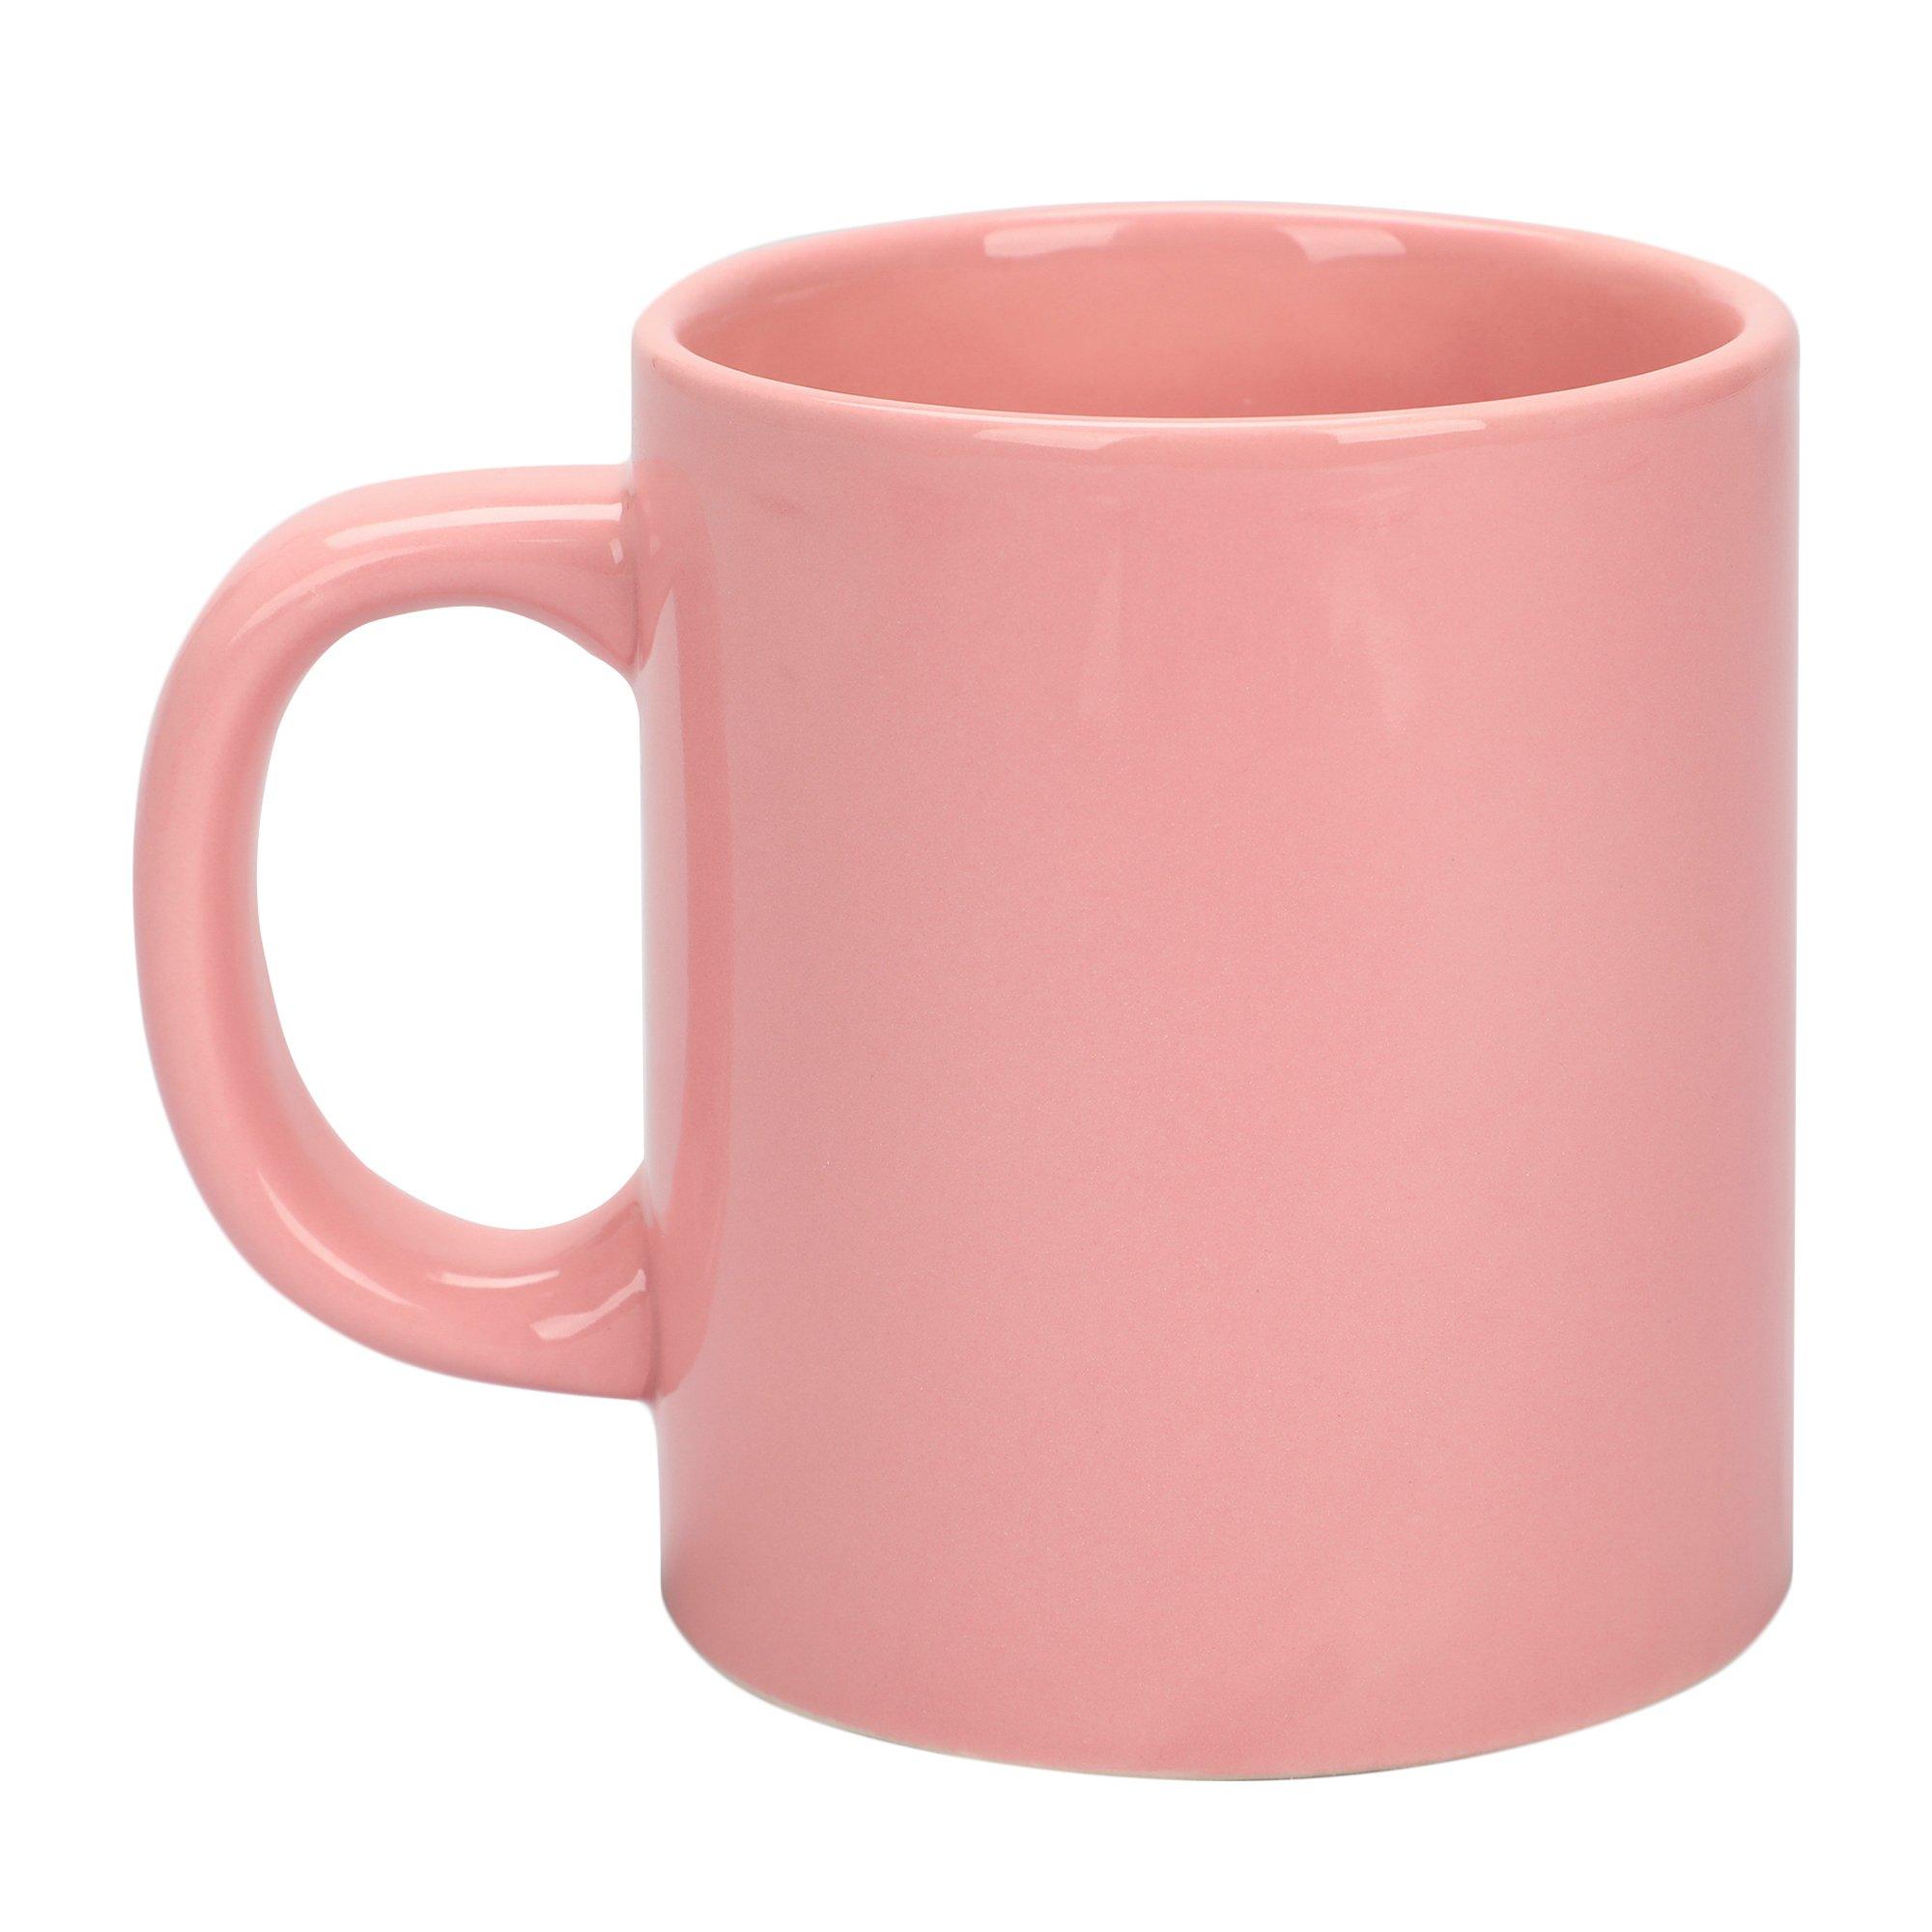 Sanrio My Melody 16 oz Pink Ceramic Mug